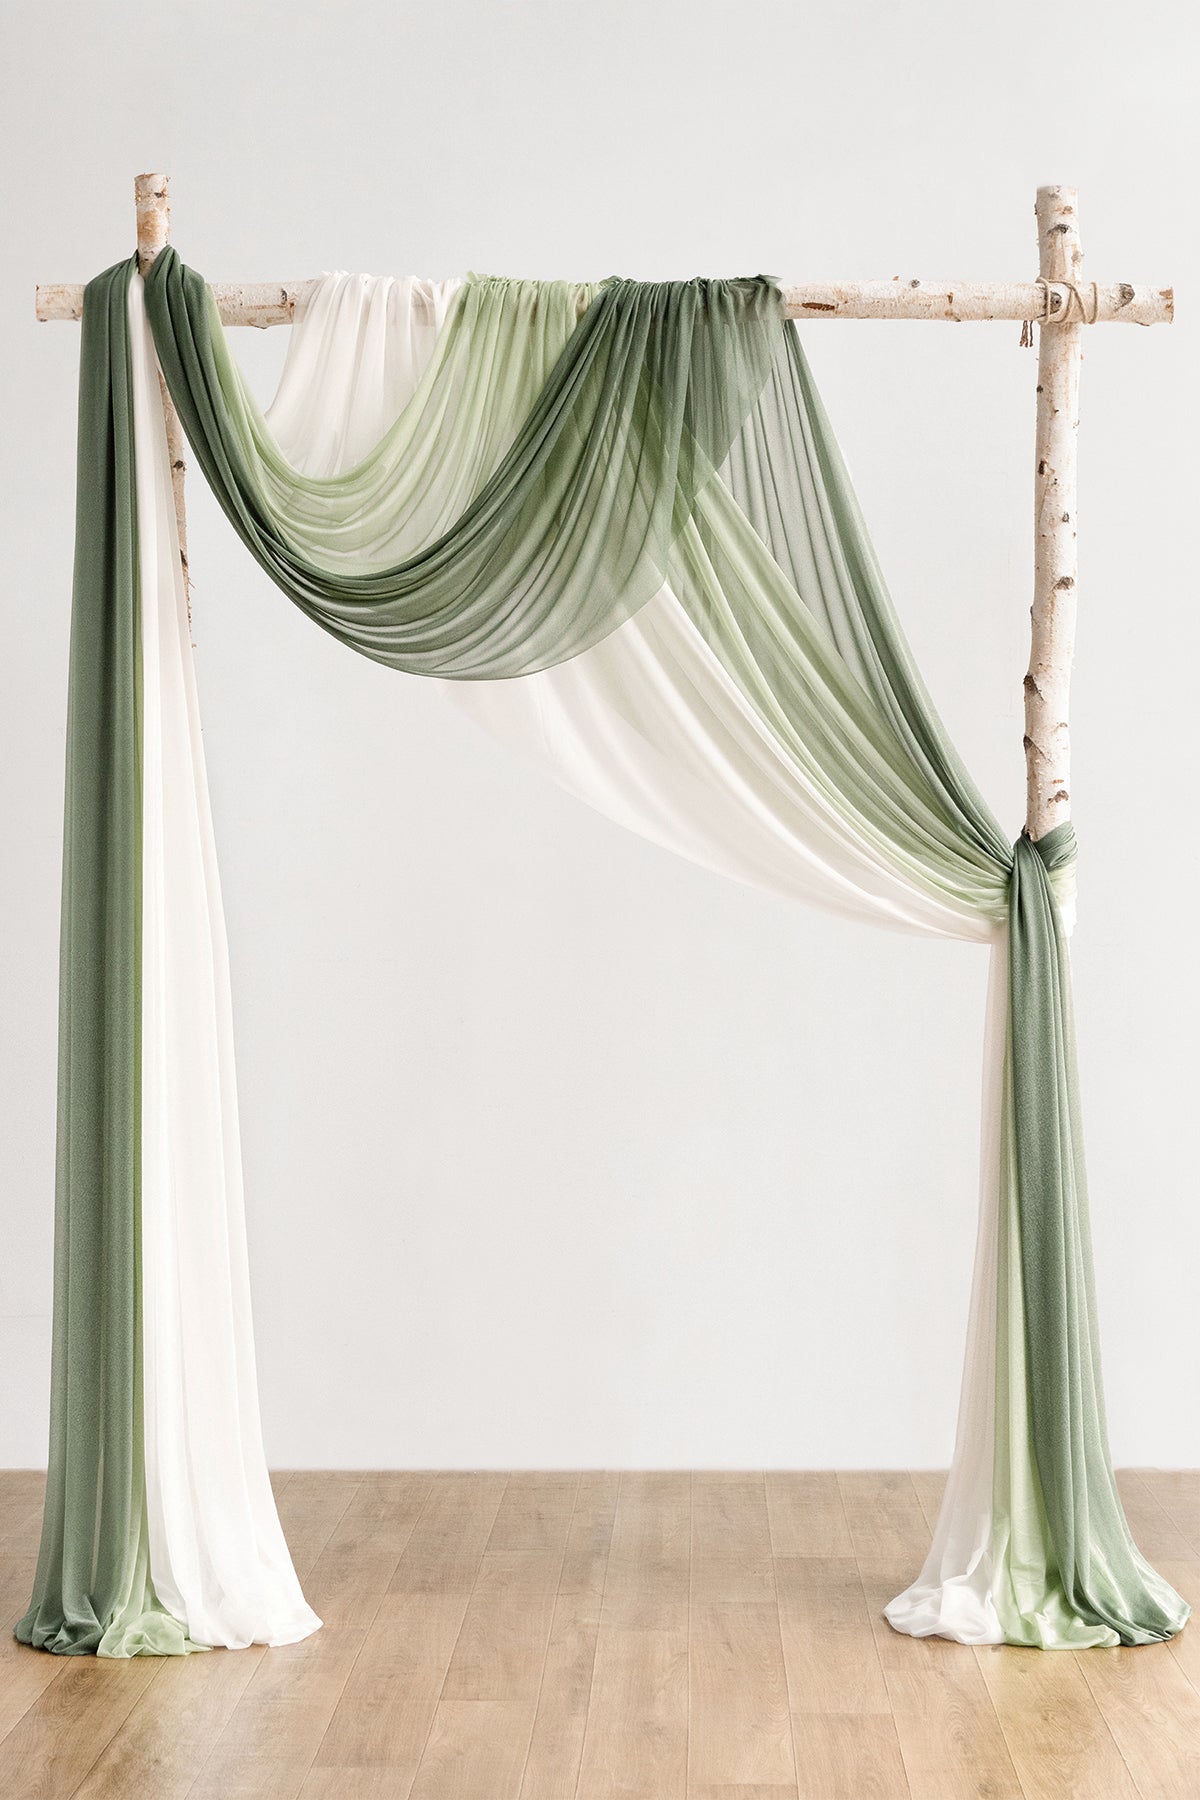 Wedding Arch Drapes in Orange & Olive Green